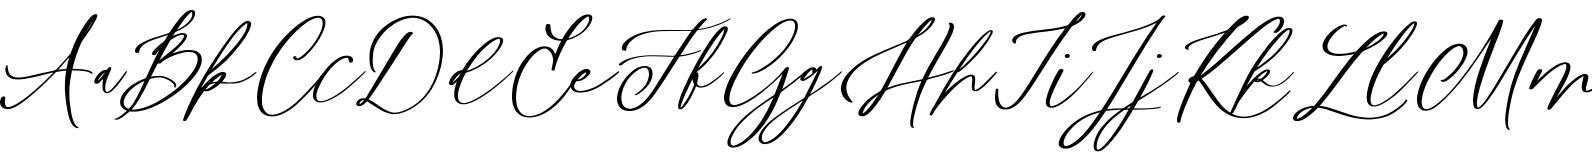 Rosematty Script Font OpenType